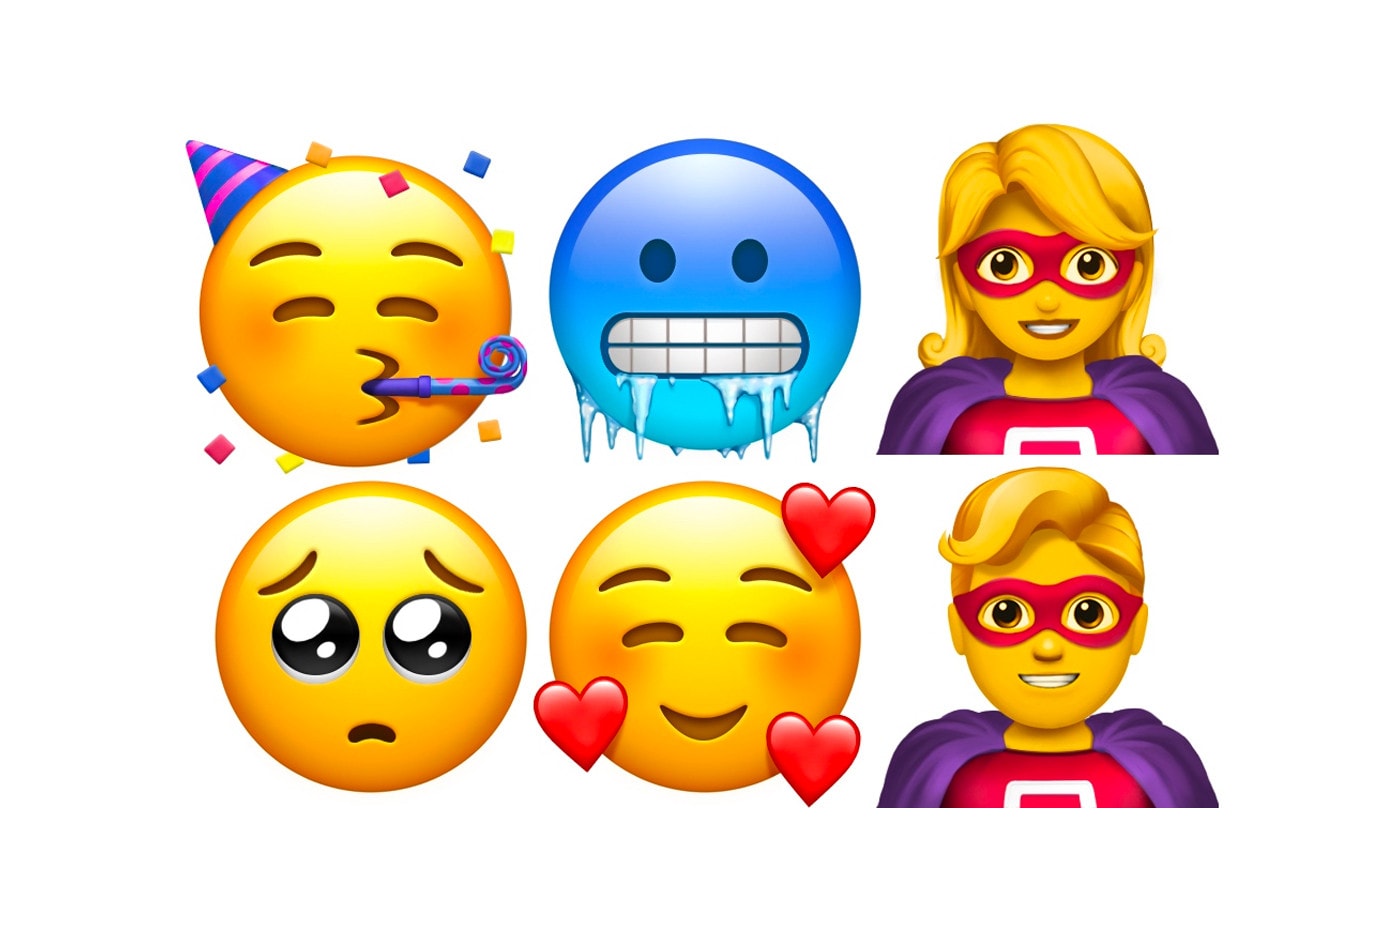 Apple 最新 iOS 12.1 版本將提供超過 70 個全新 Emoji